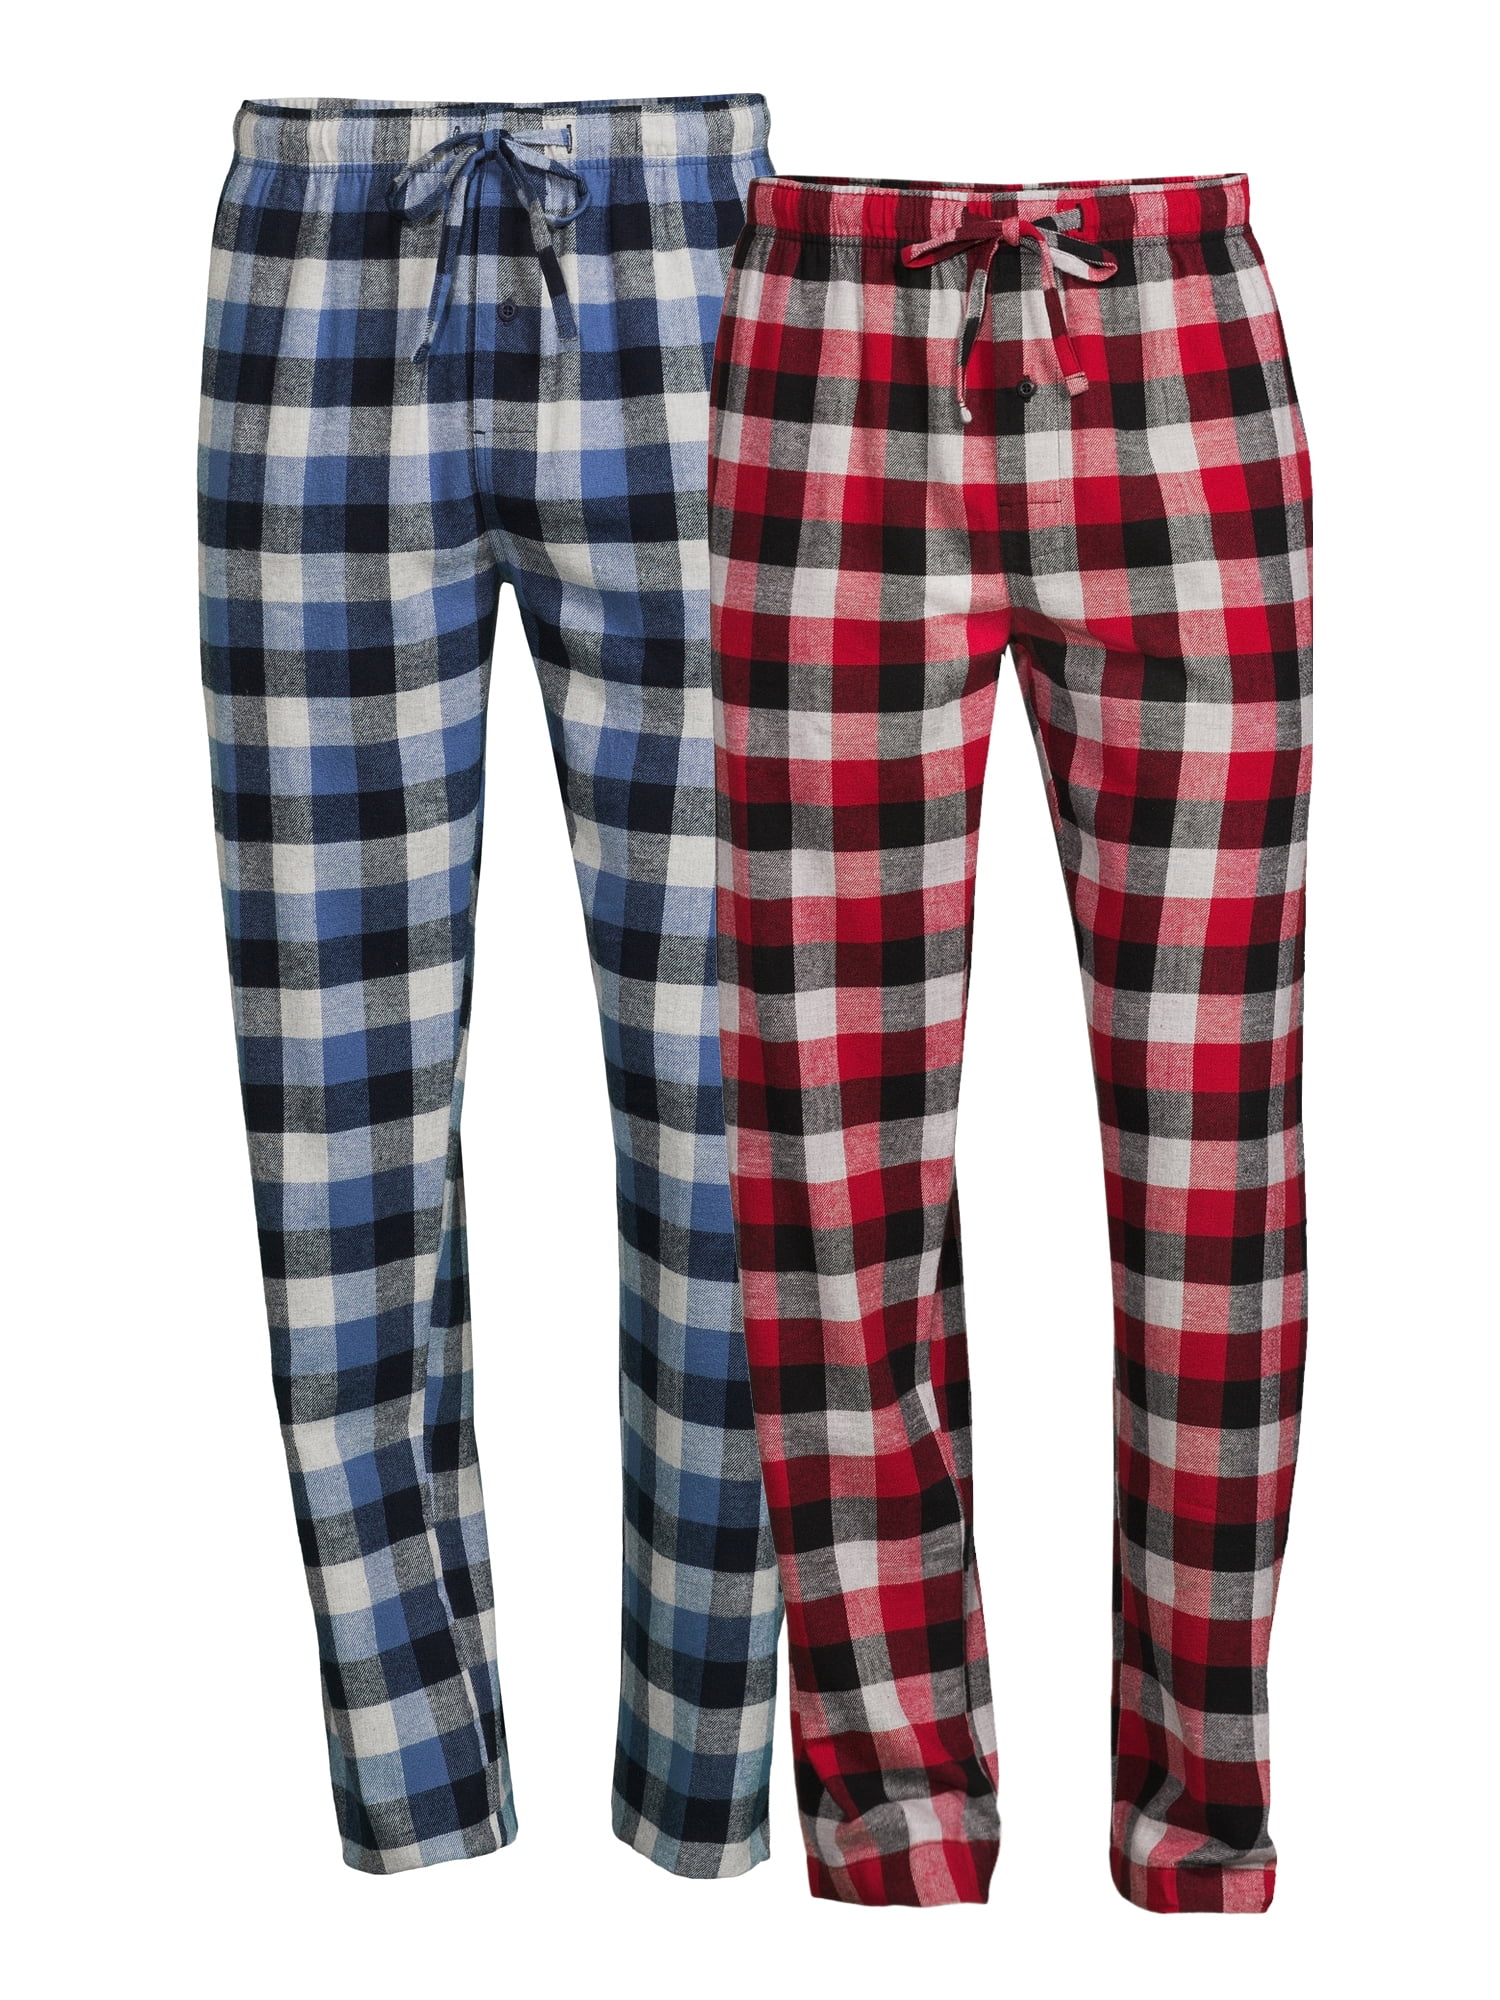 Hanes Sleepwear Mens Knit Pant W/ Elastic Waistband L Pick SZ/Color. 